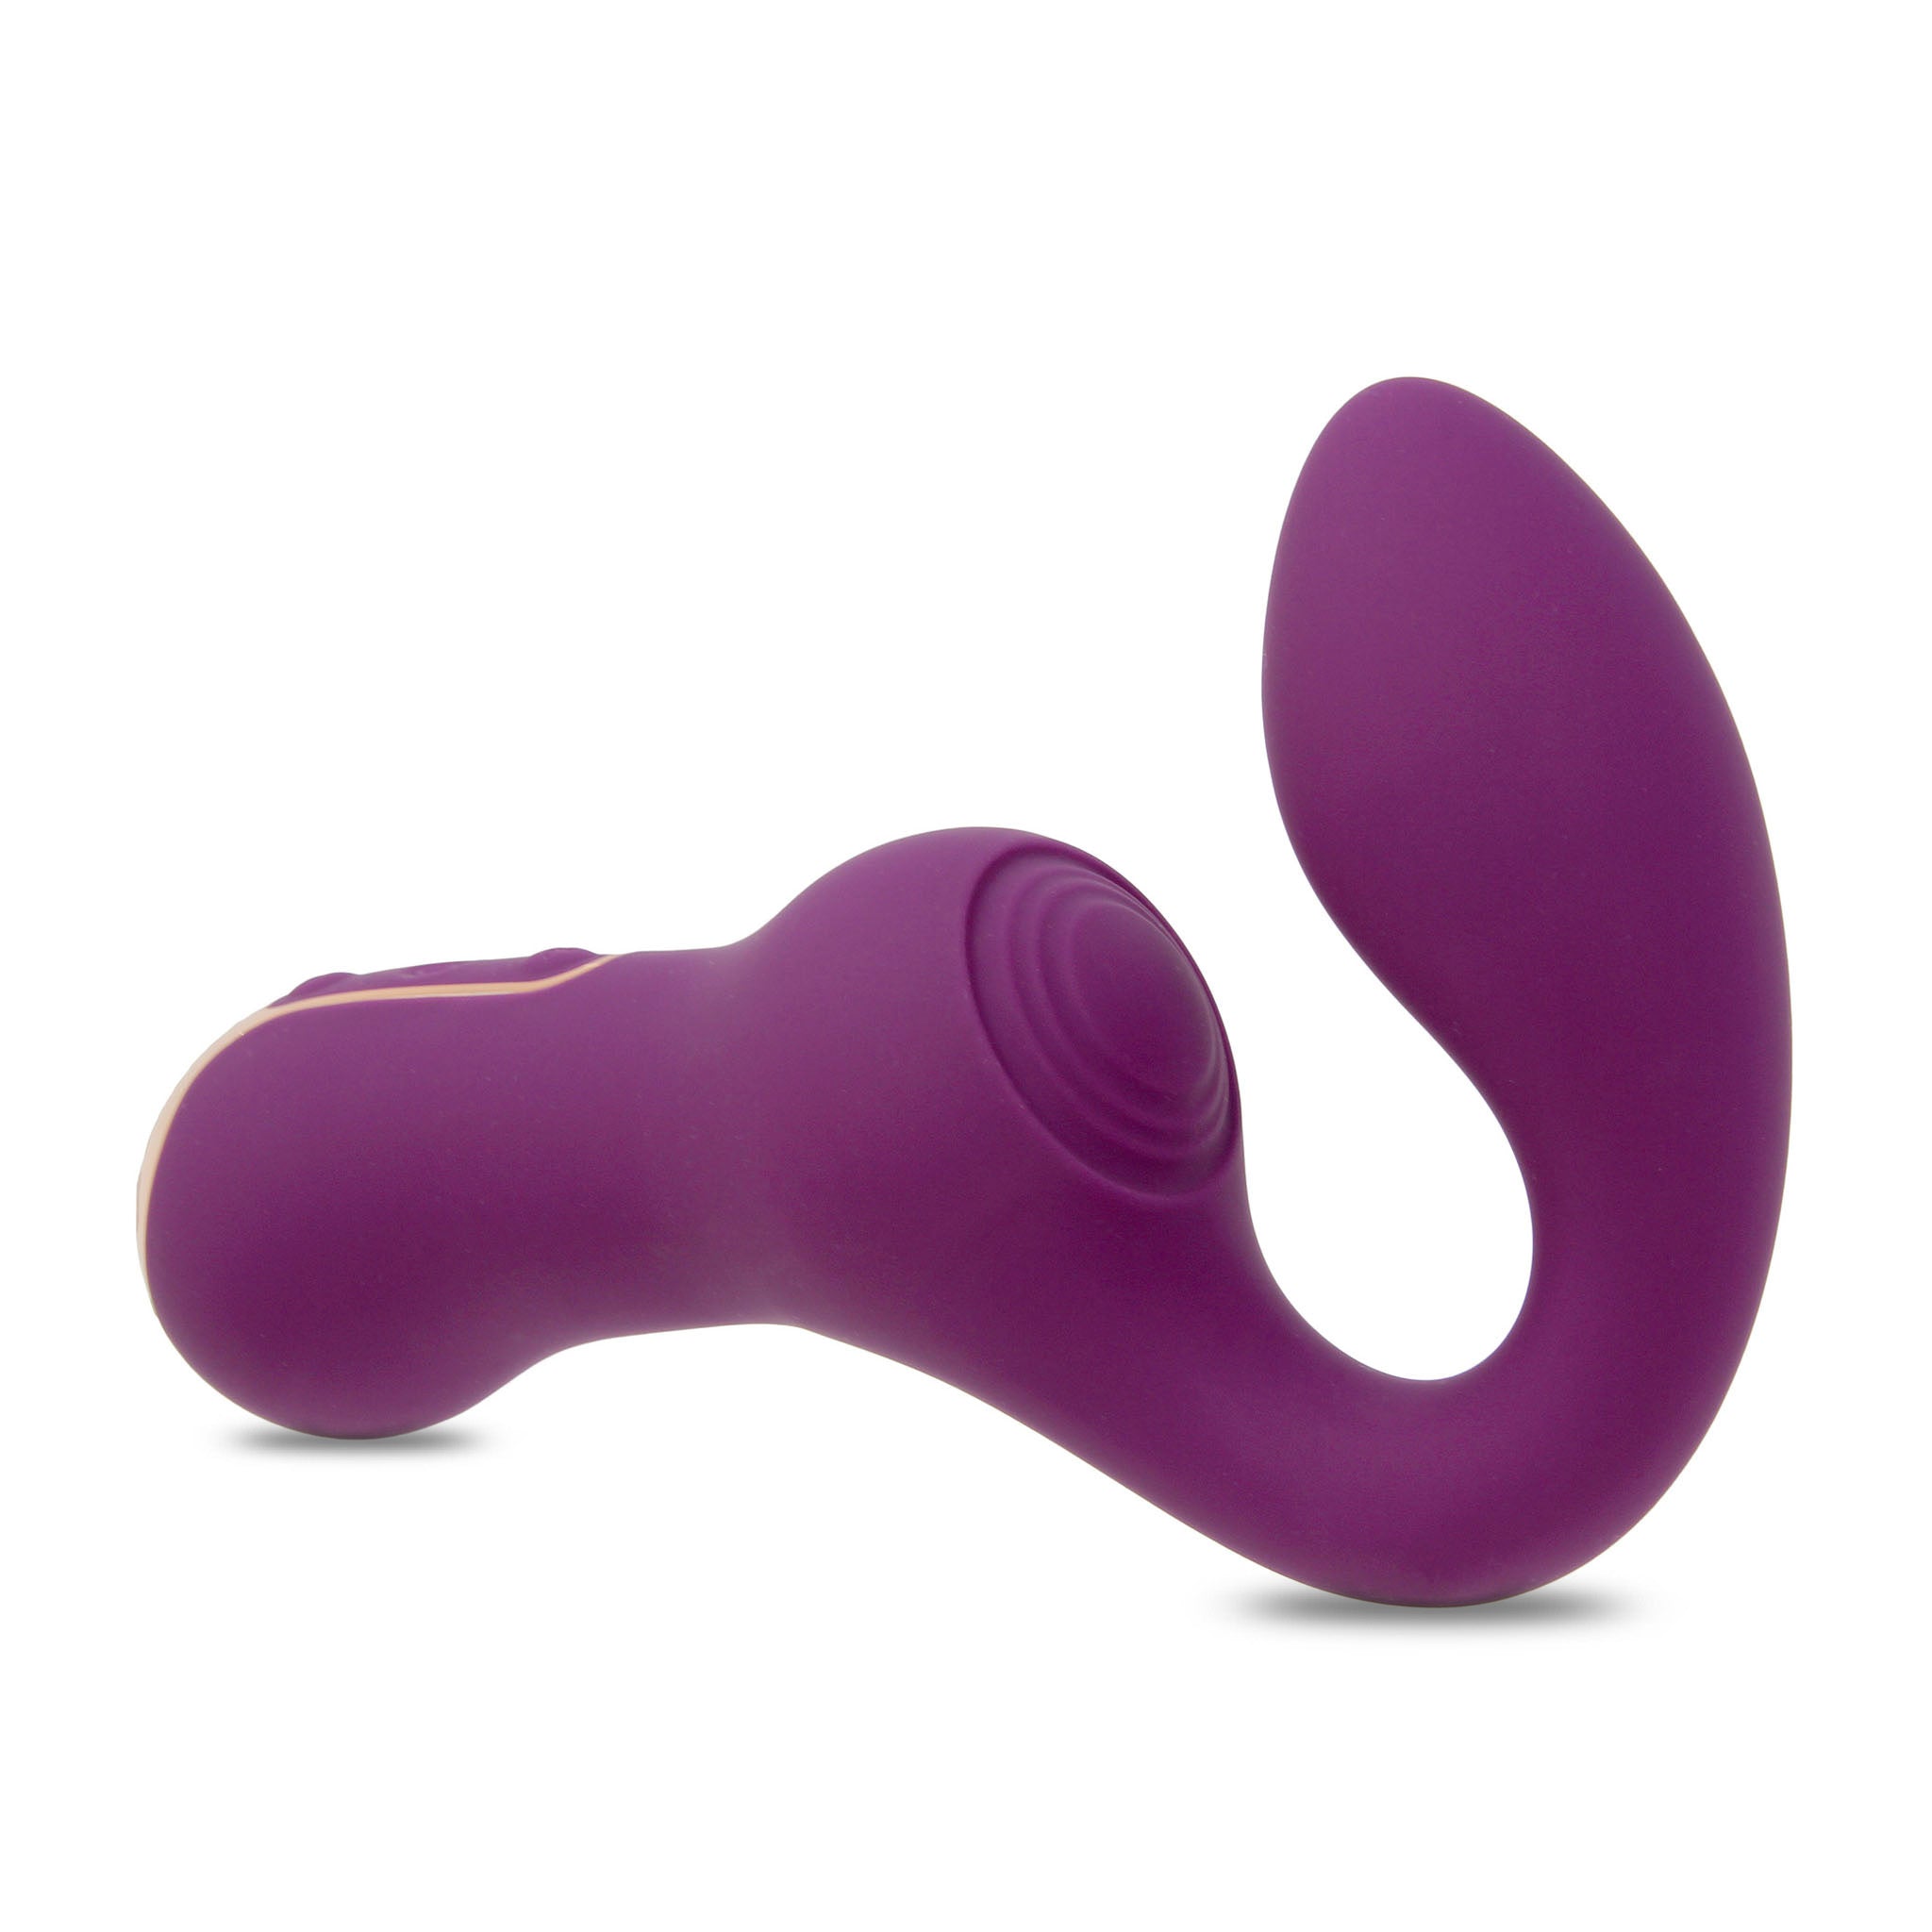 Dual Action G-spot Clitoral Massager Vibrator Stimulator Tickler Female Sex Toys